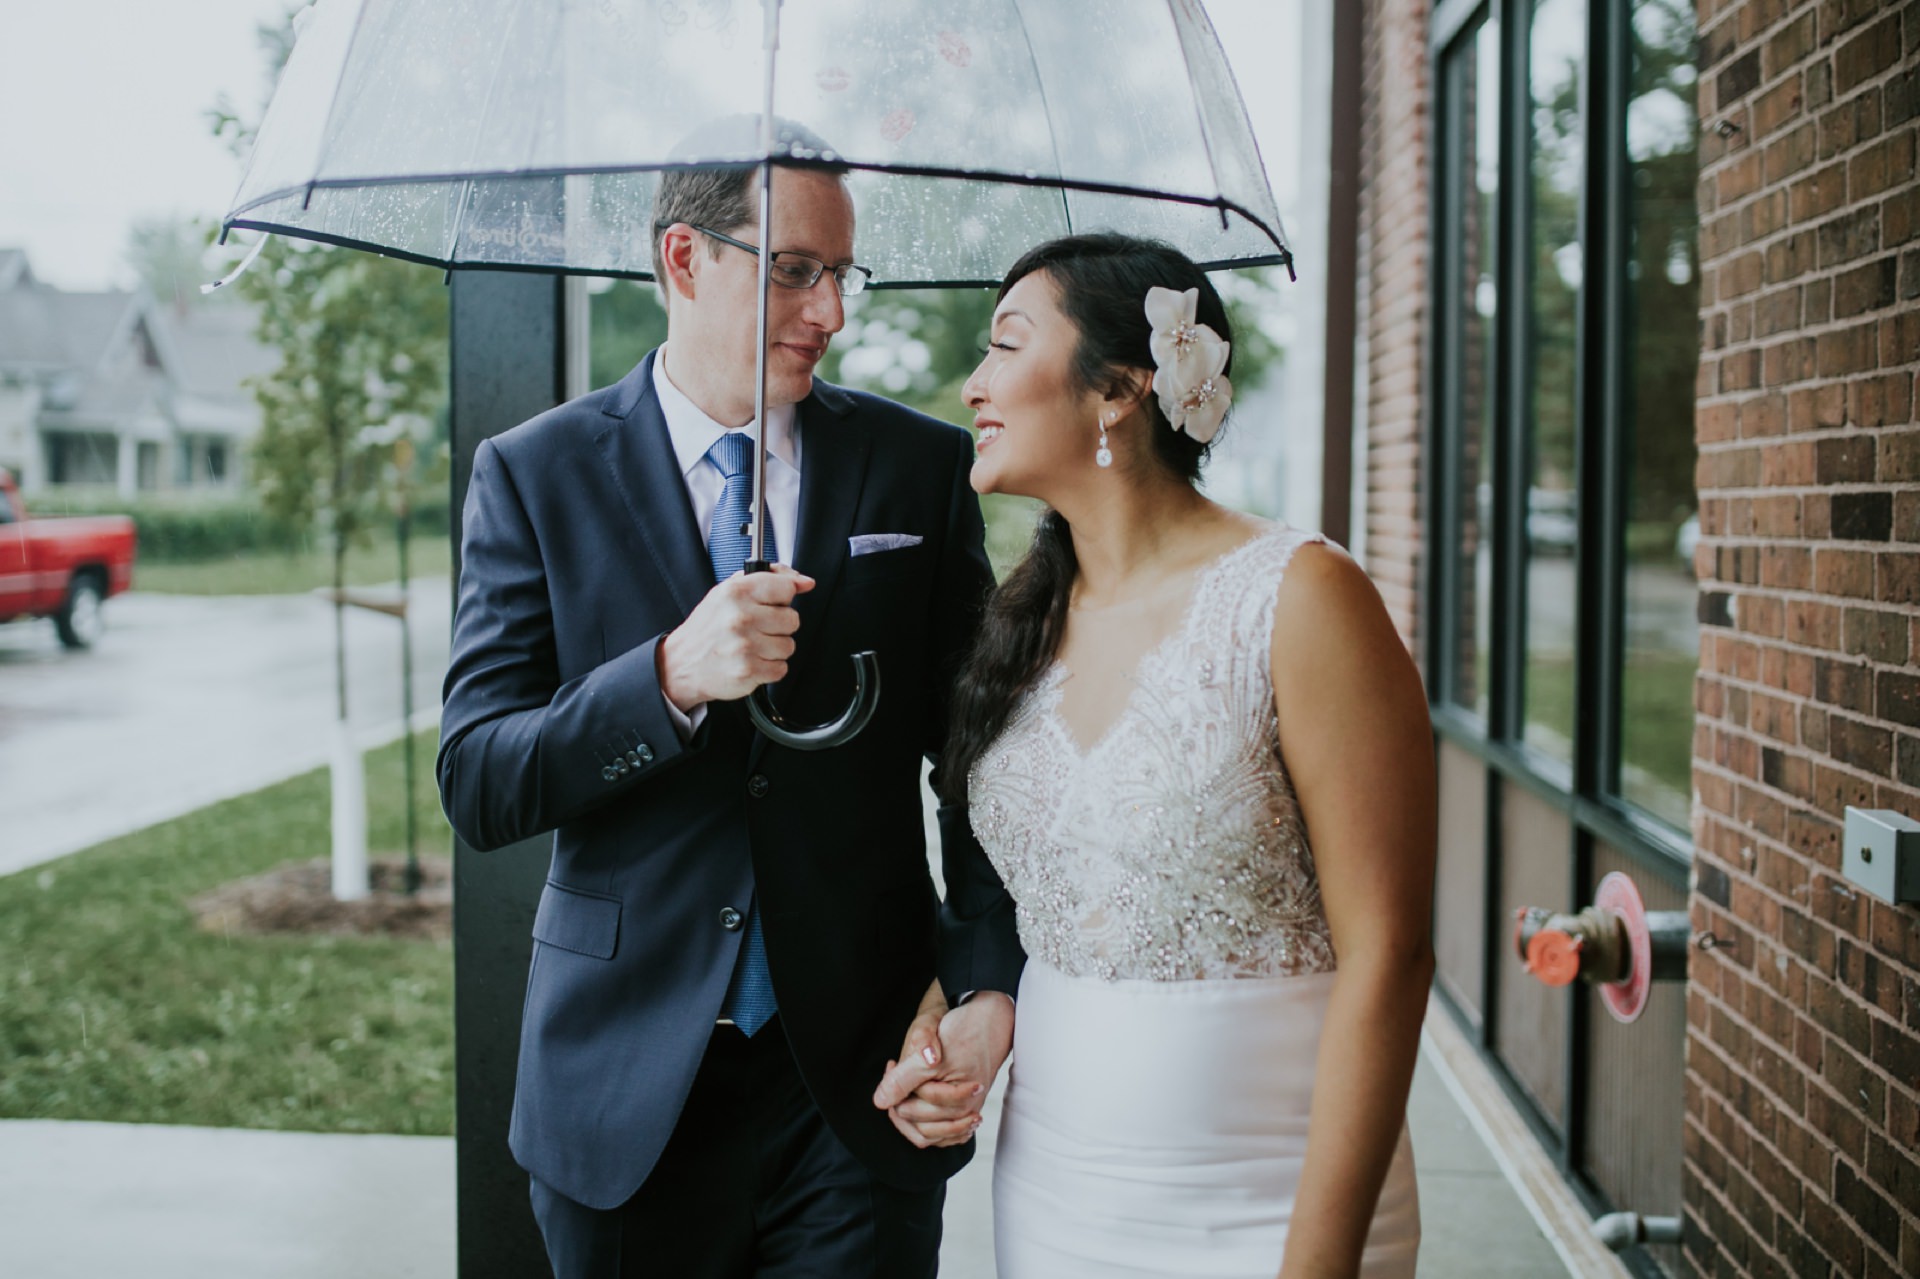 bride and groom under umbrella backlit by warm light on a rainy Neidhammer wedding day